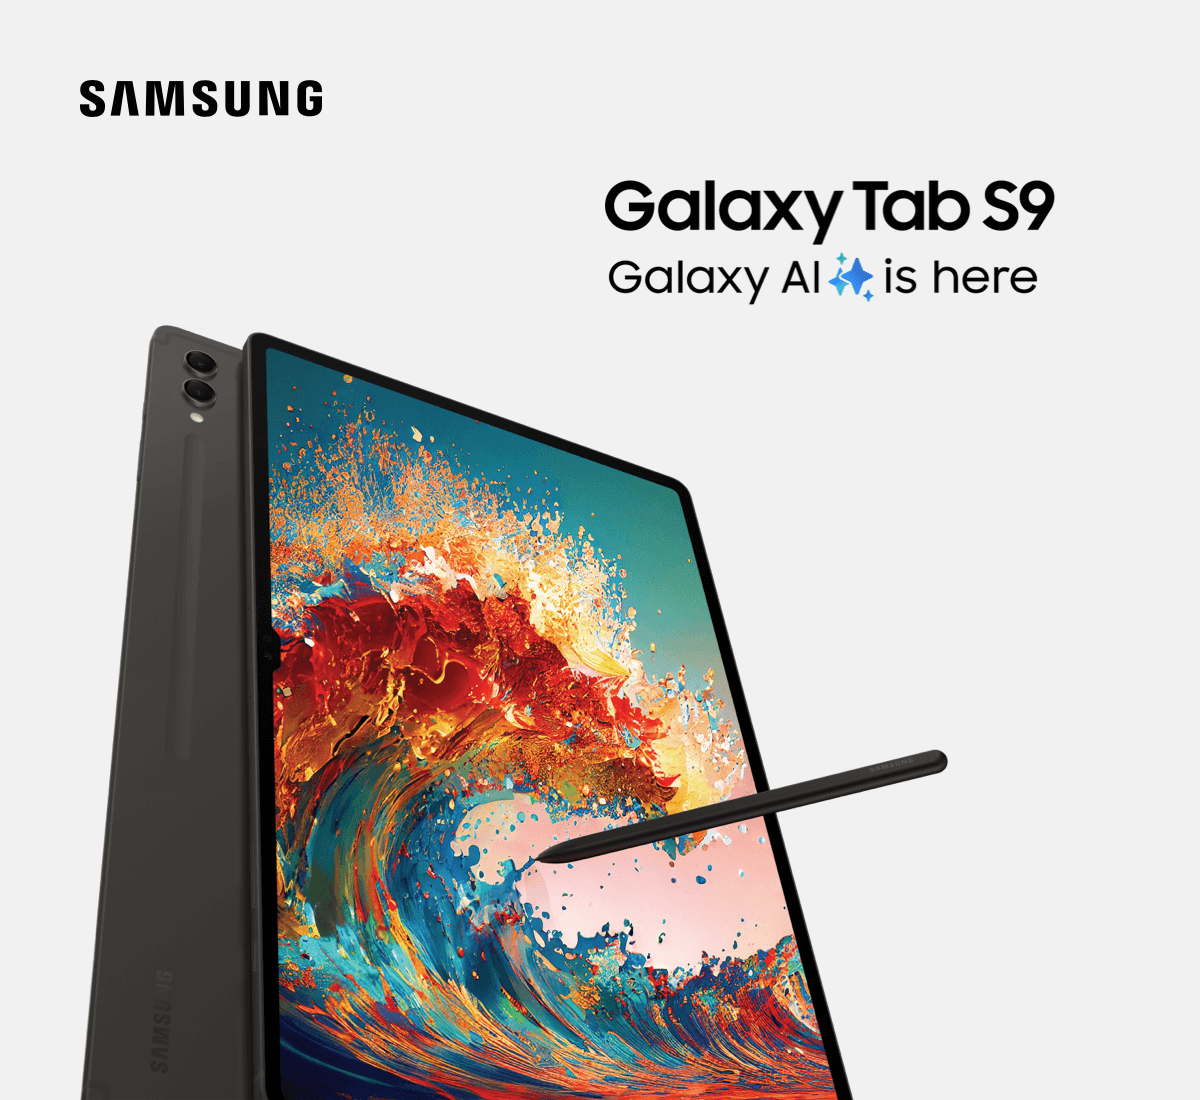 Samsung. The new Galaxy Tab S9